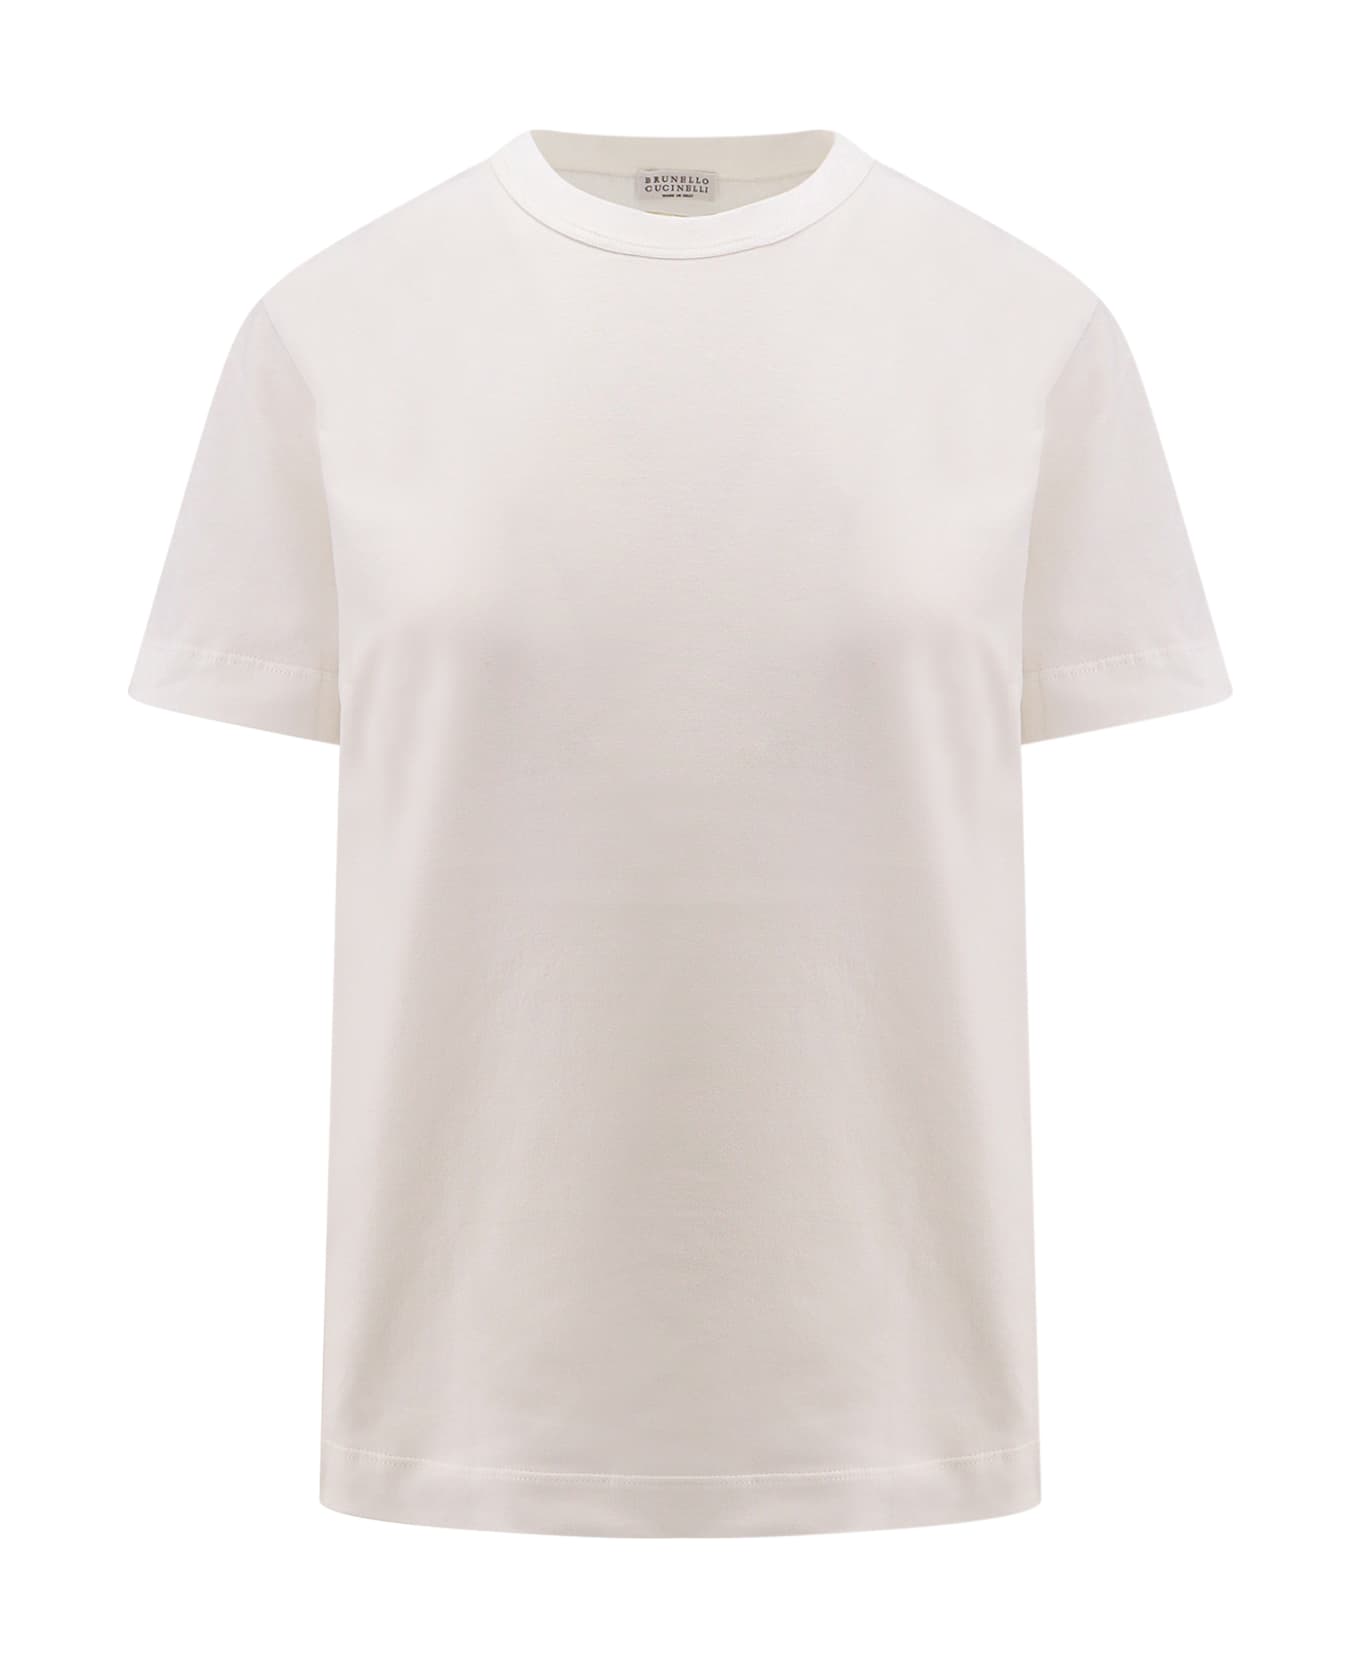 Brunello Cucinelli T-shirt - White